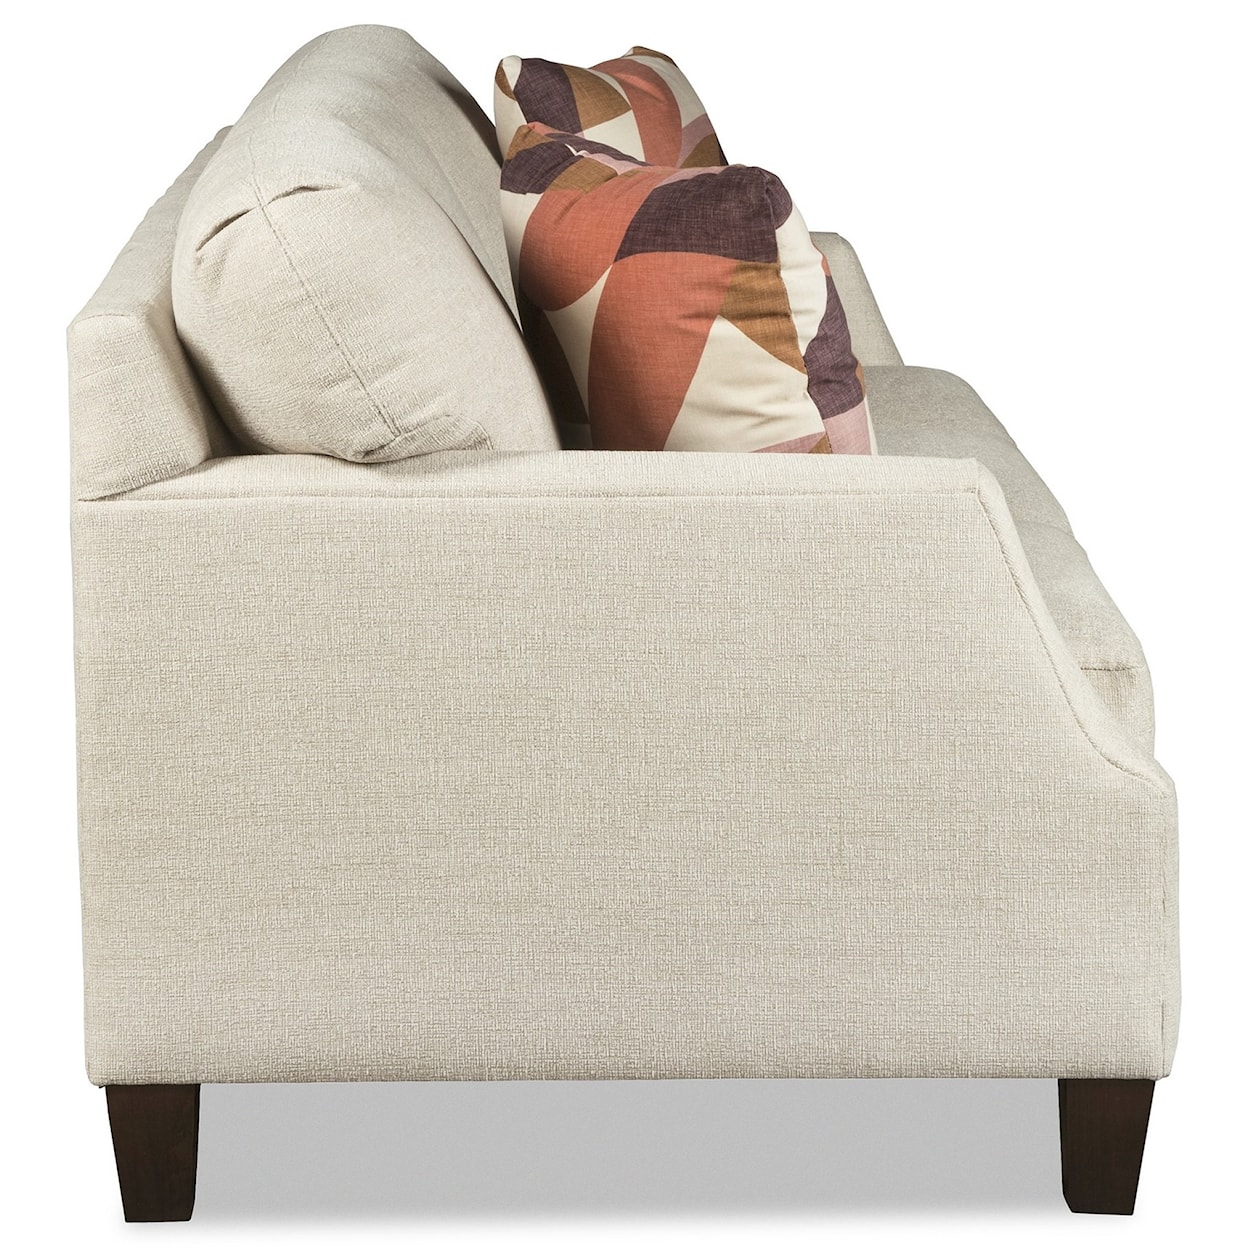 Hickorycraft M9 Custom - Design Options Customizable Sofa